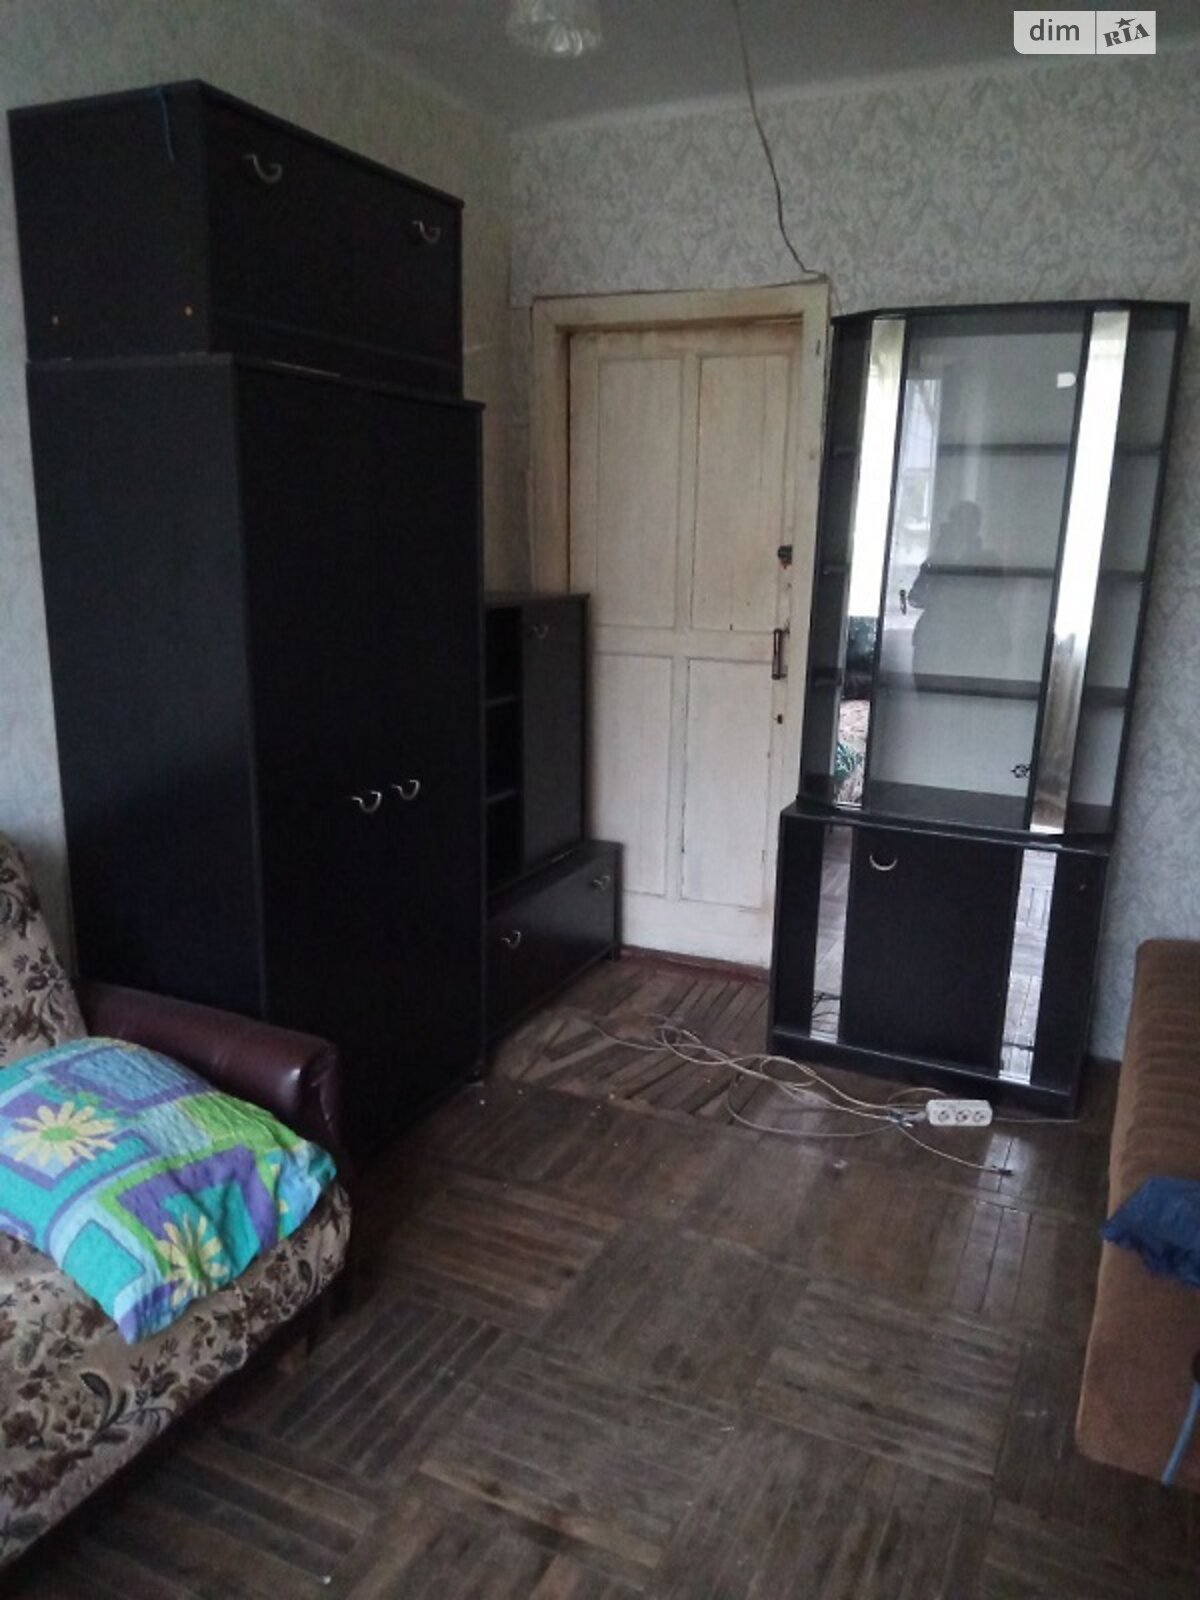 Комната в Одессе, на ул. Люстдорфская дорога в районе Черемушки на продажу фото 1